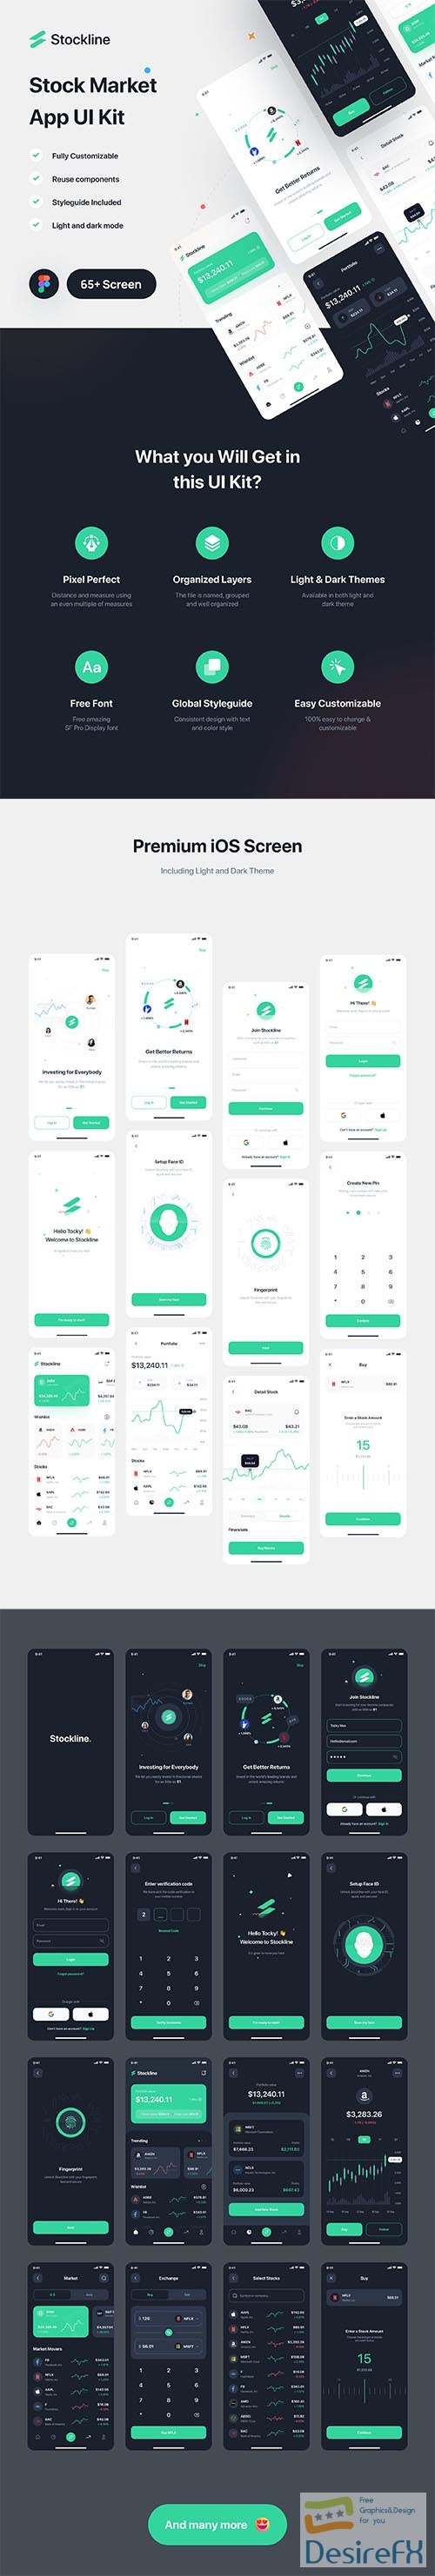 Stockline - Stock Market App UI Kit UI8